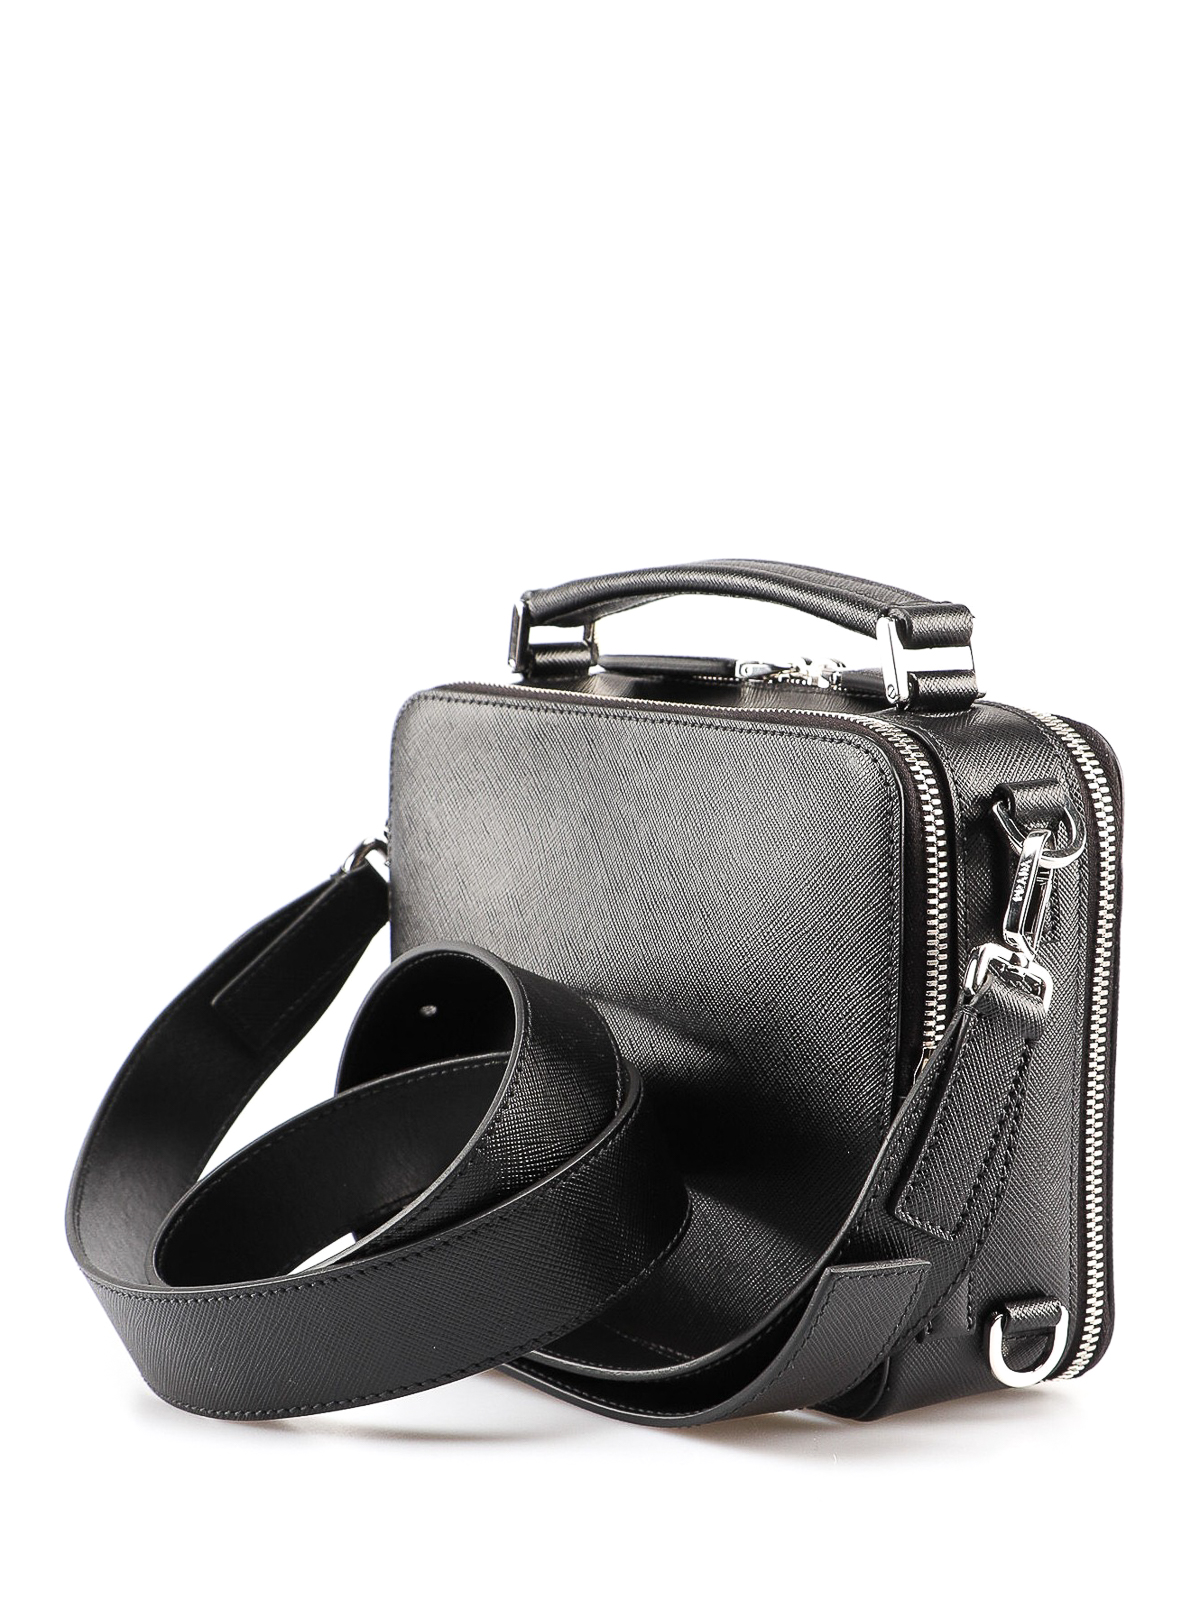 Cross body bags Prada - Double zip saffiano leather bag - 2VH0699Z2002